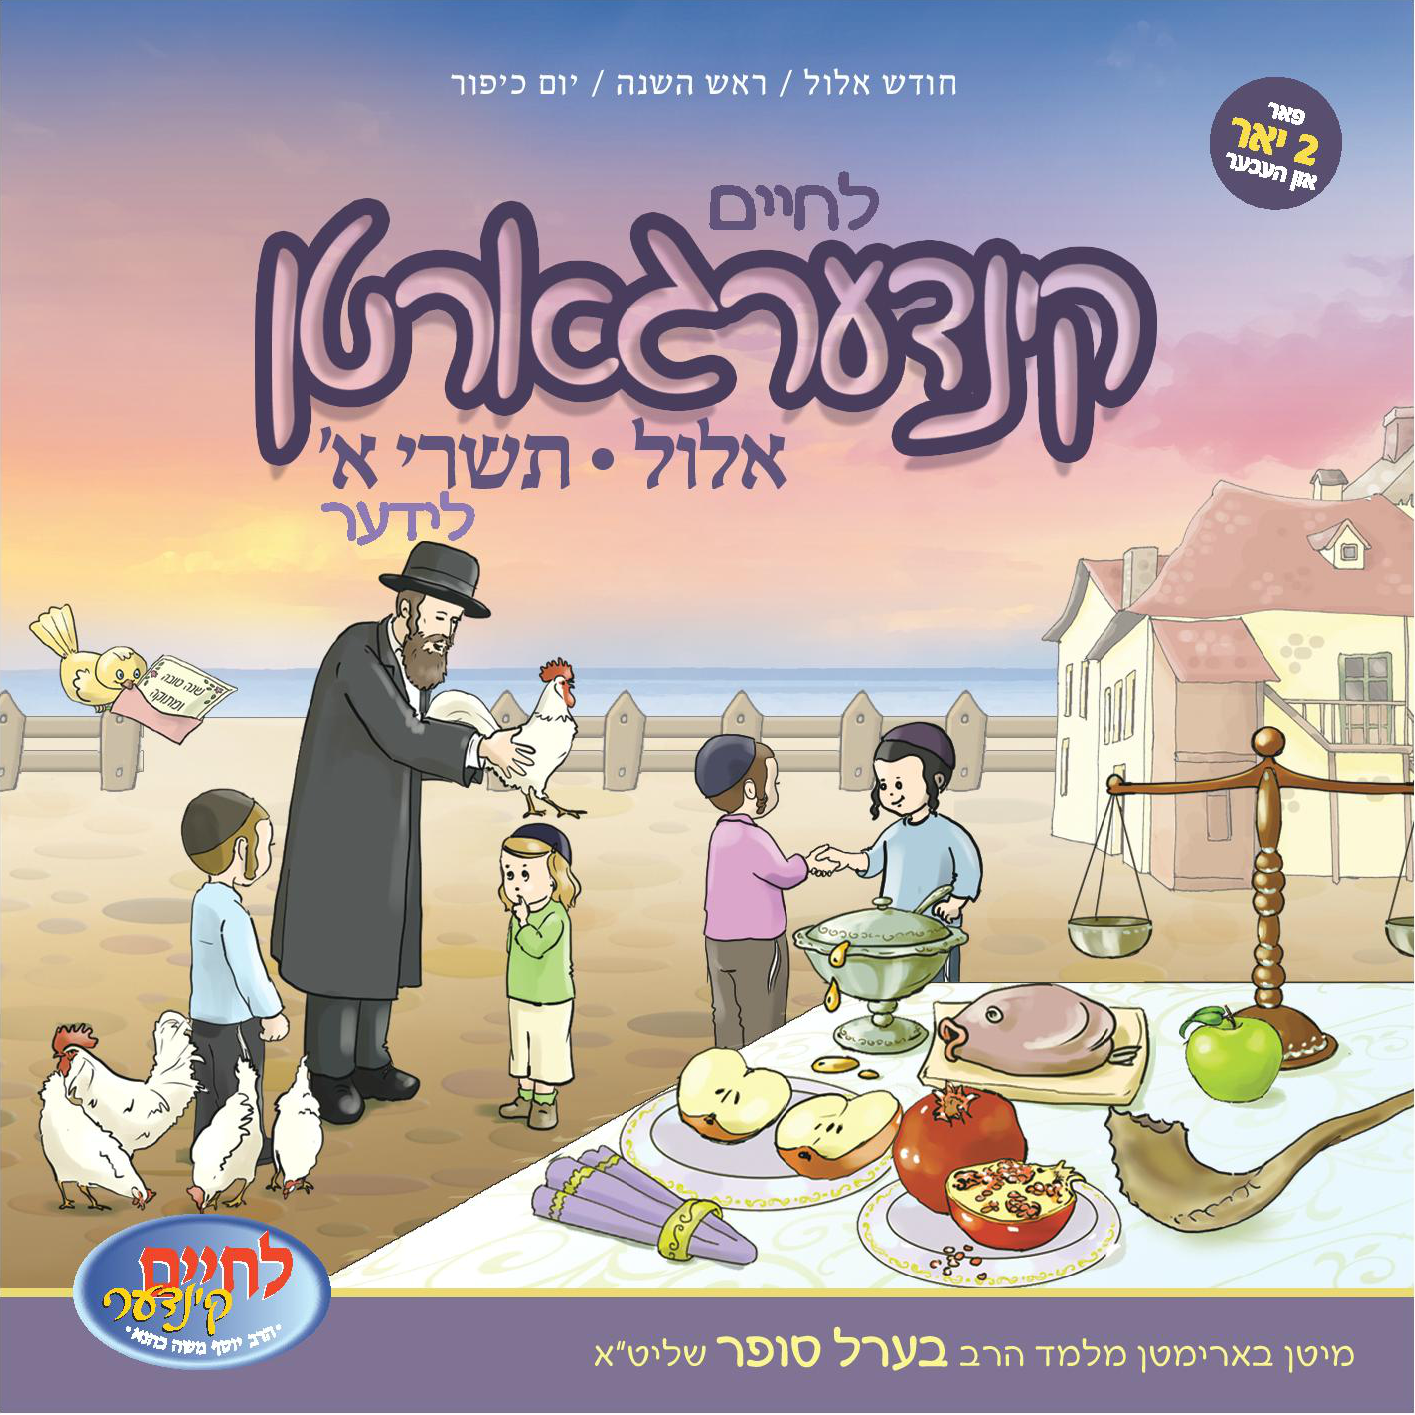 Lchaim - Kindergarden Leeder 4 - Elul Tishrei (Includes PDF Booklet!)